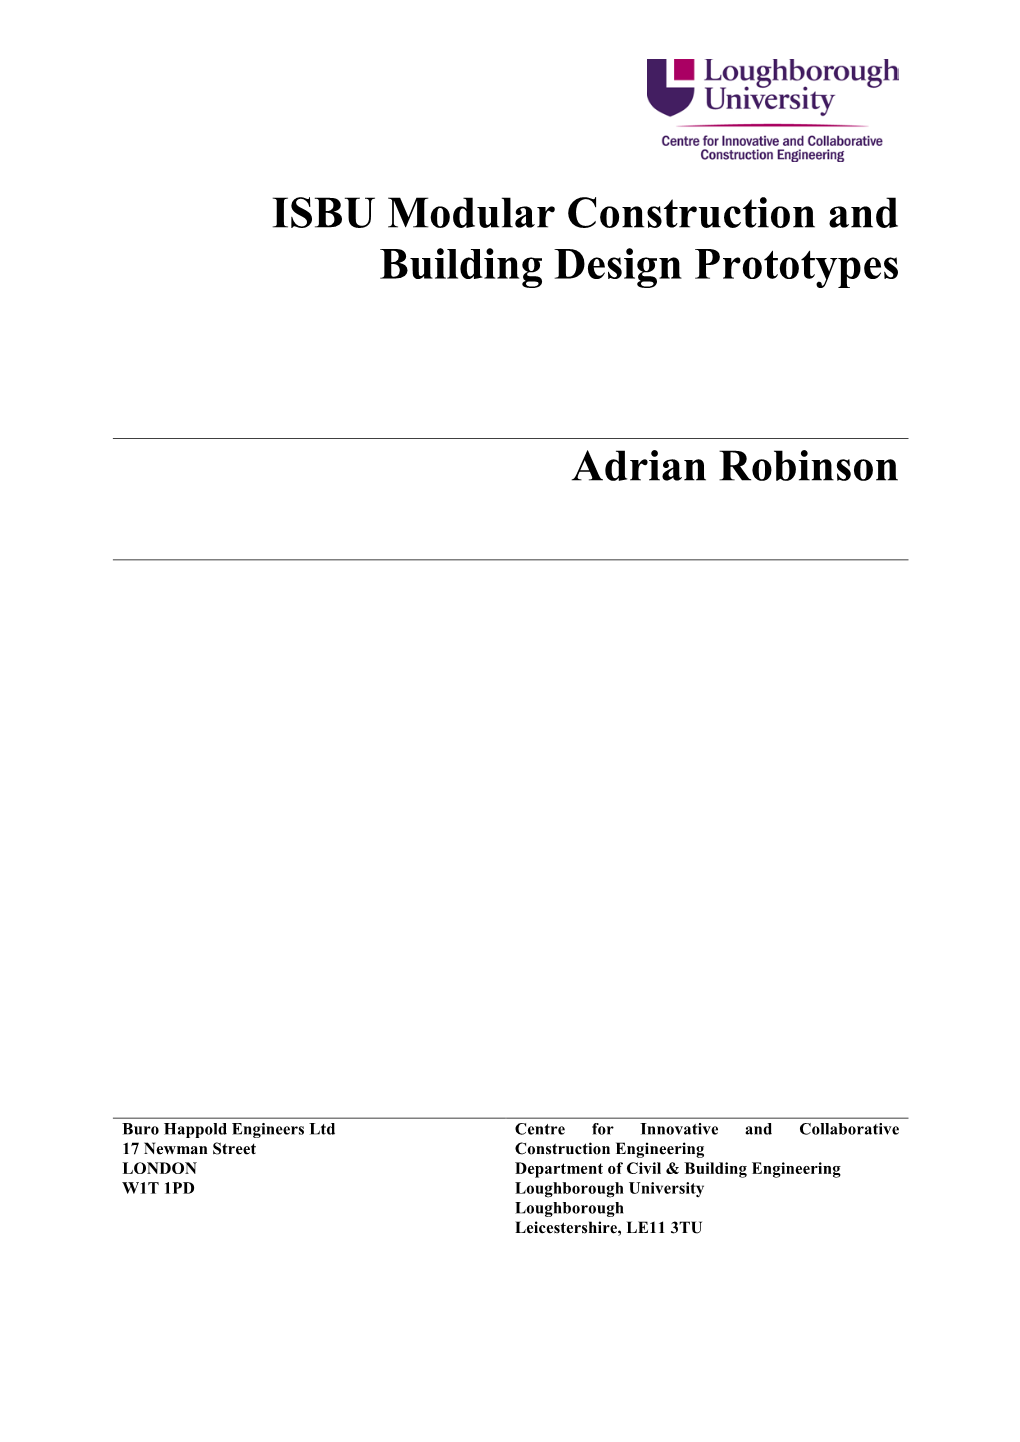 ISBU Modular Construction and Building Design Prototypes